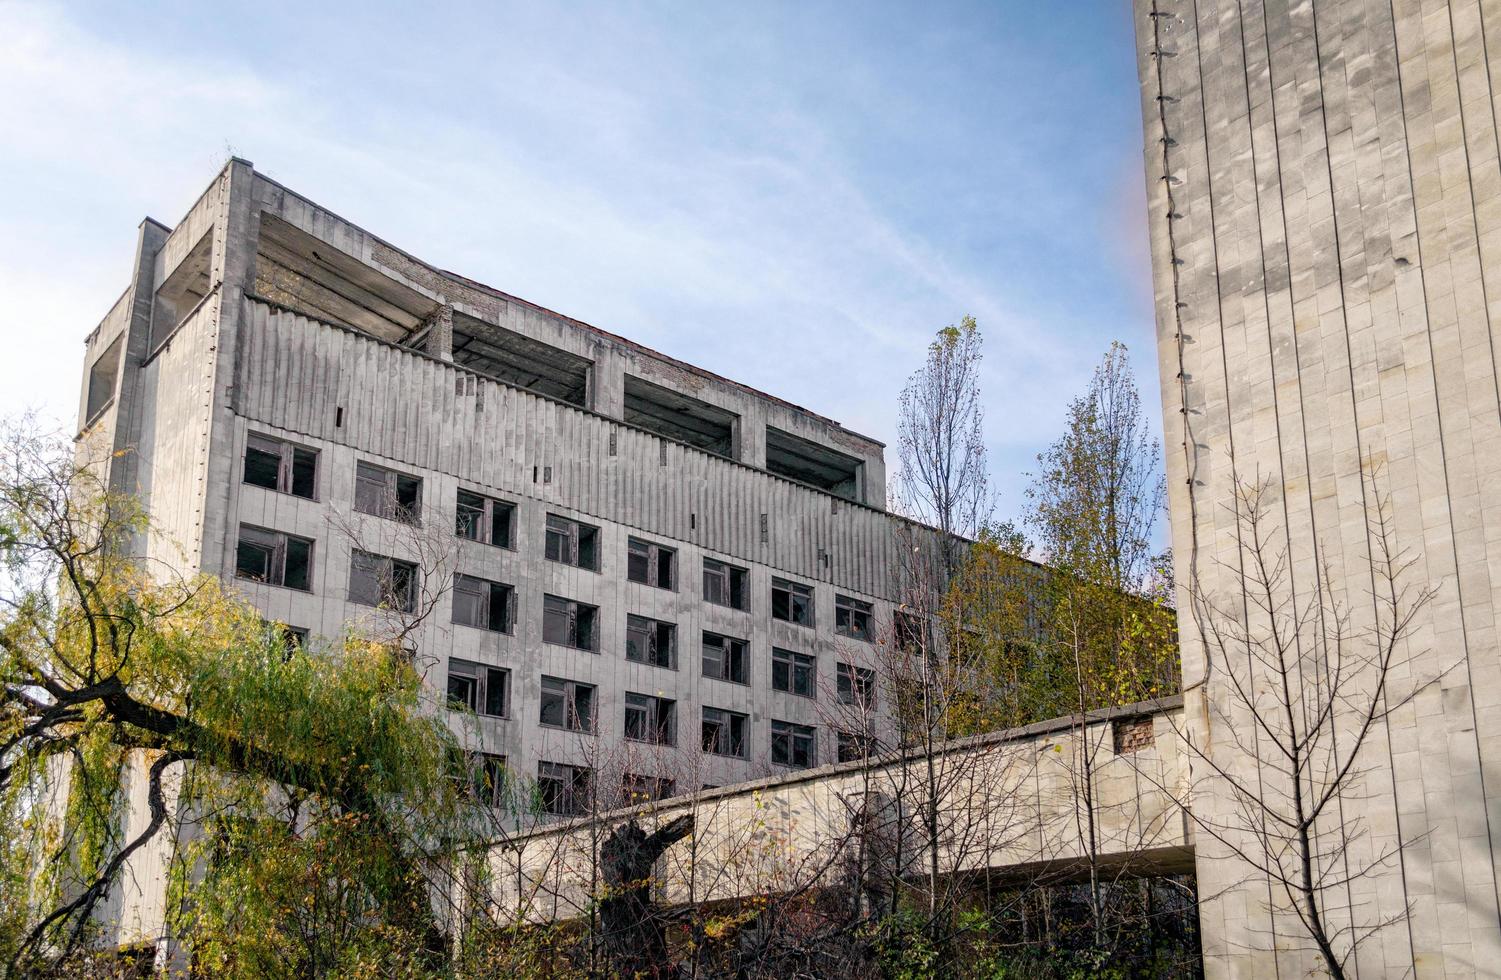 pripyat, ucrania, 2021 - hotel ruinoso en chernobyl foto